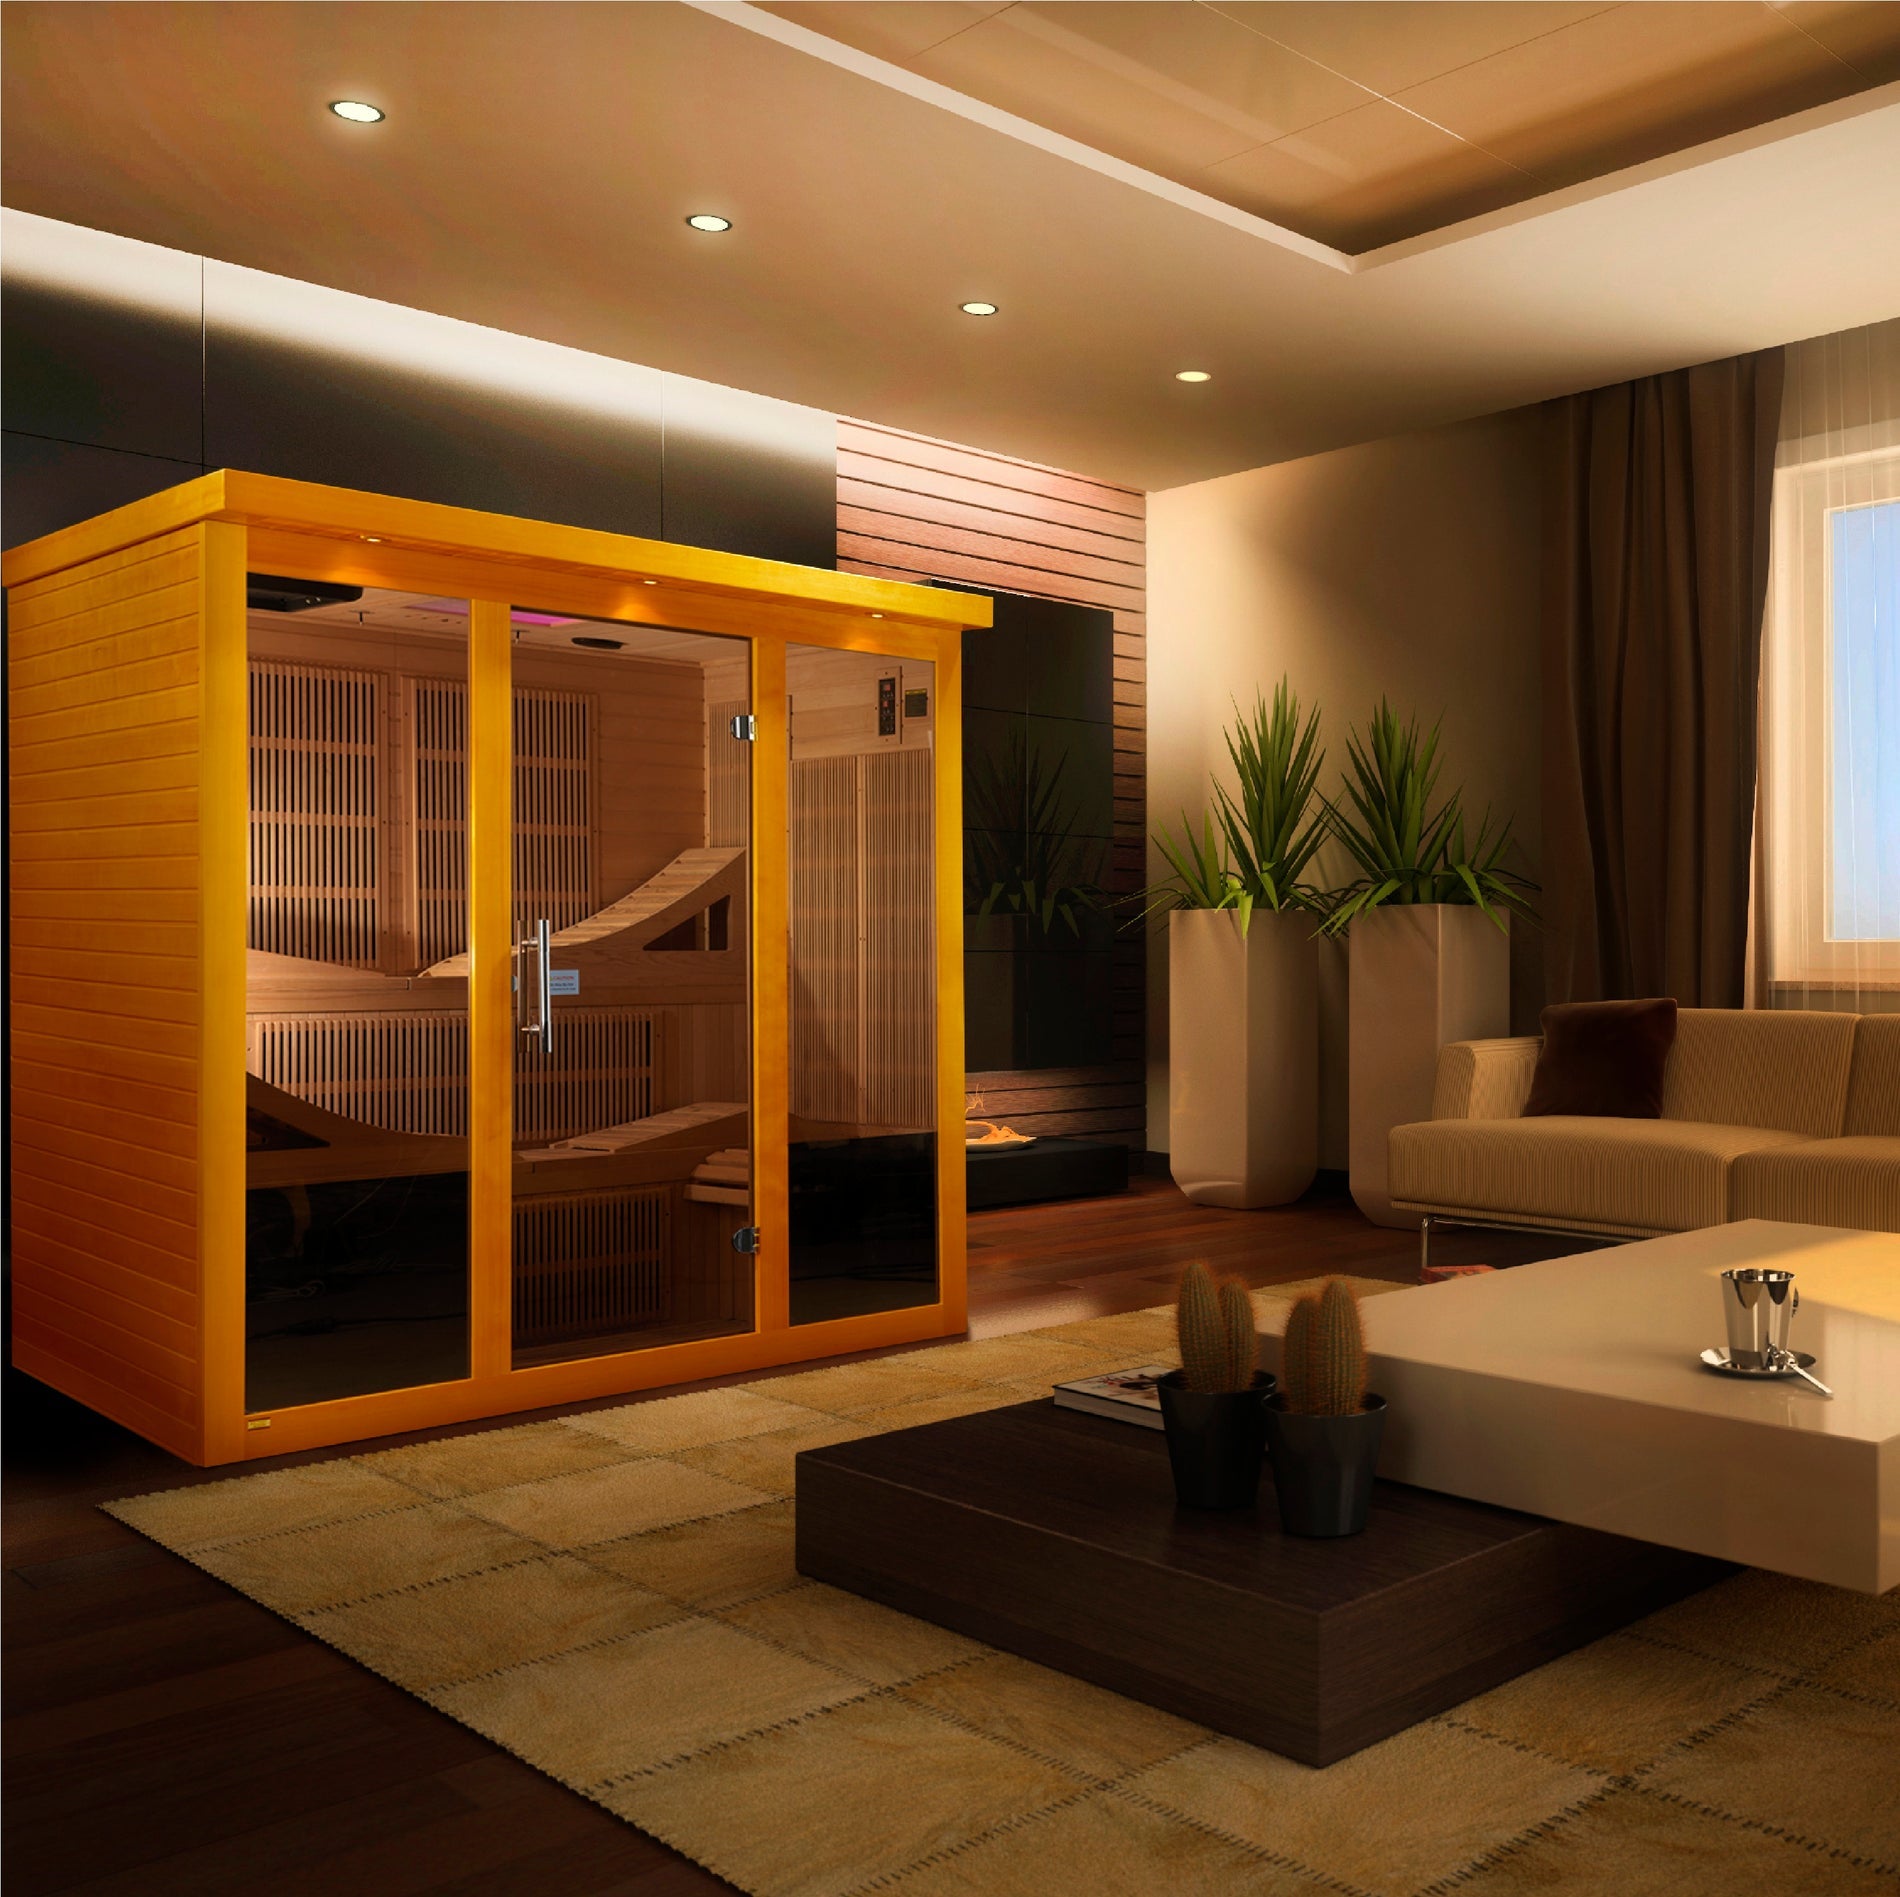 Golden Designs FAR Infrared Sauna "Monaco" Near Zero EMF 6-Person w/ Hemlock | GDI-6996-01